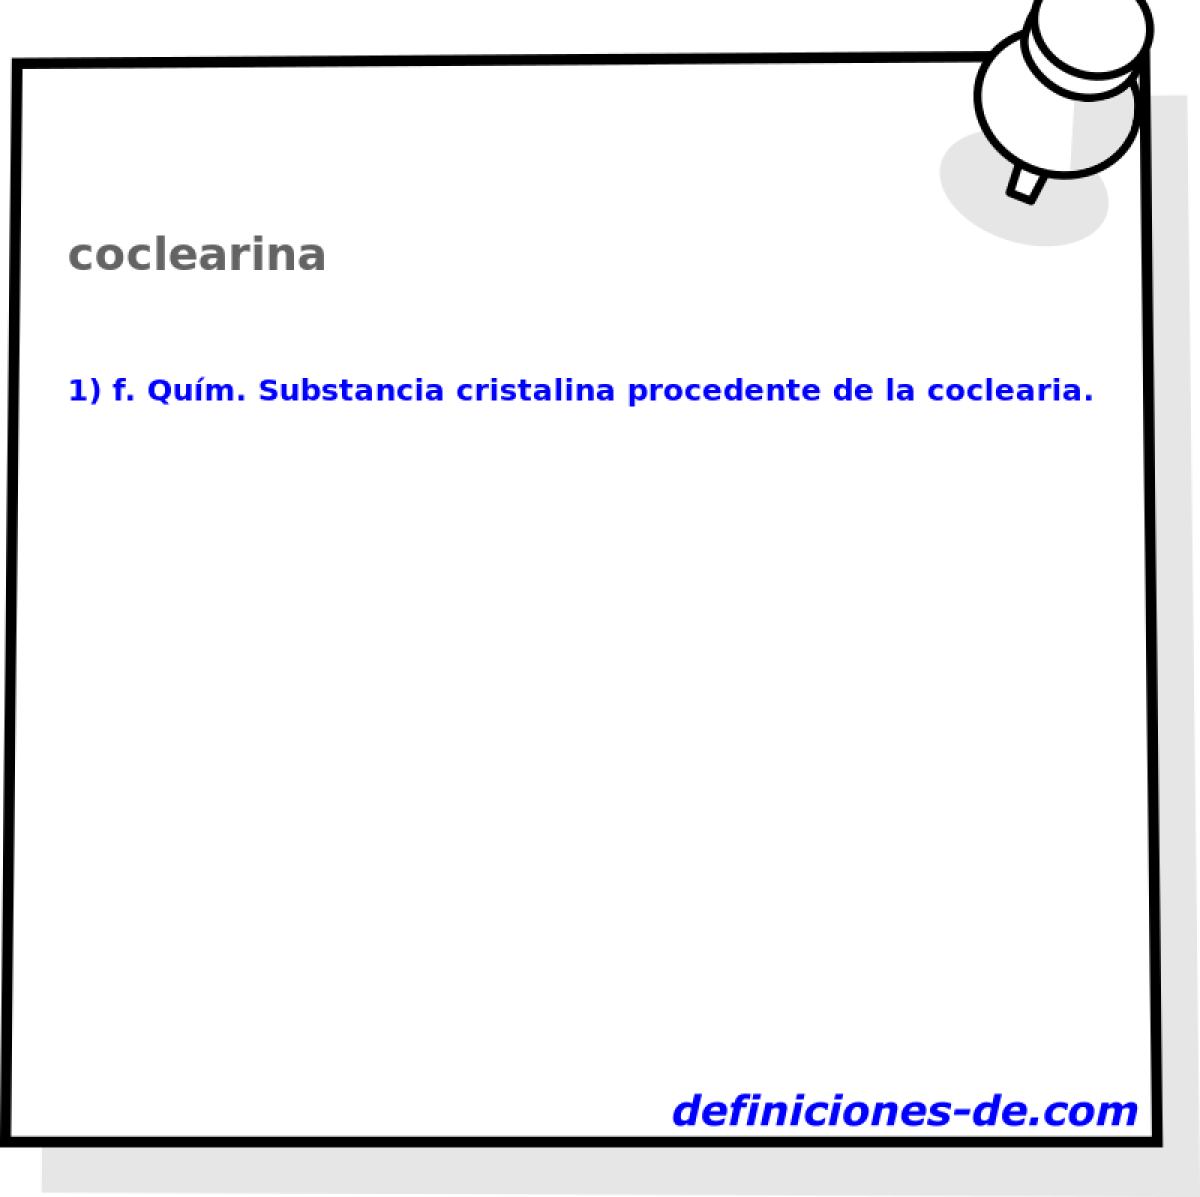 coclearina 